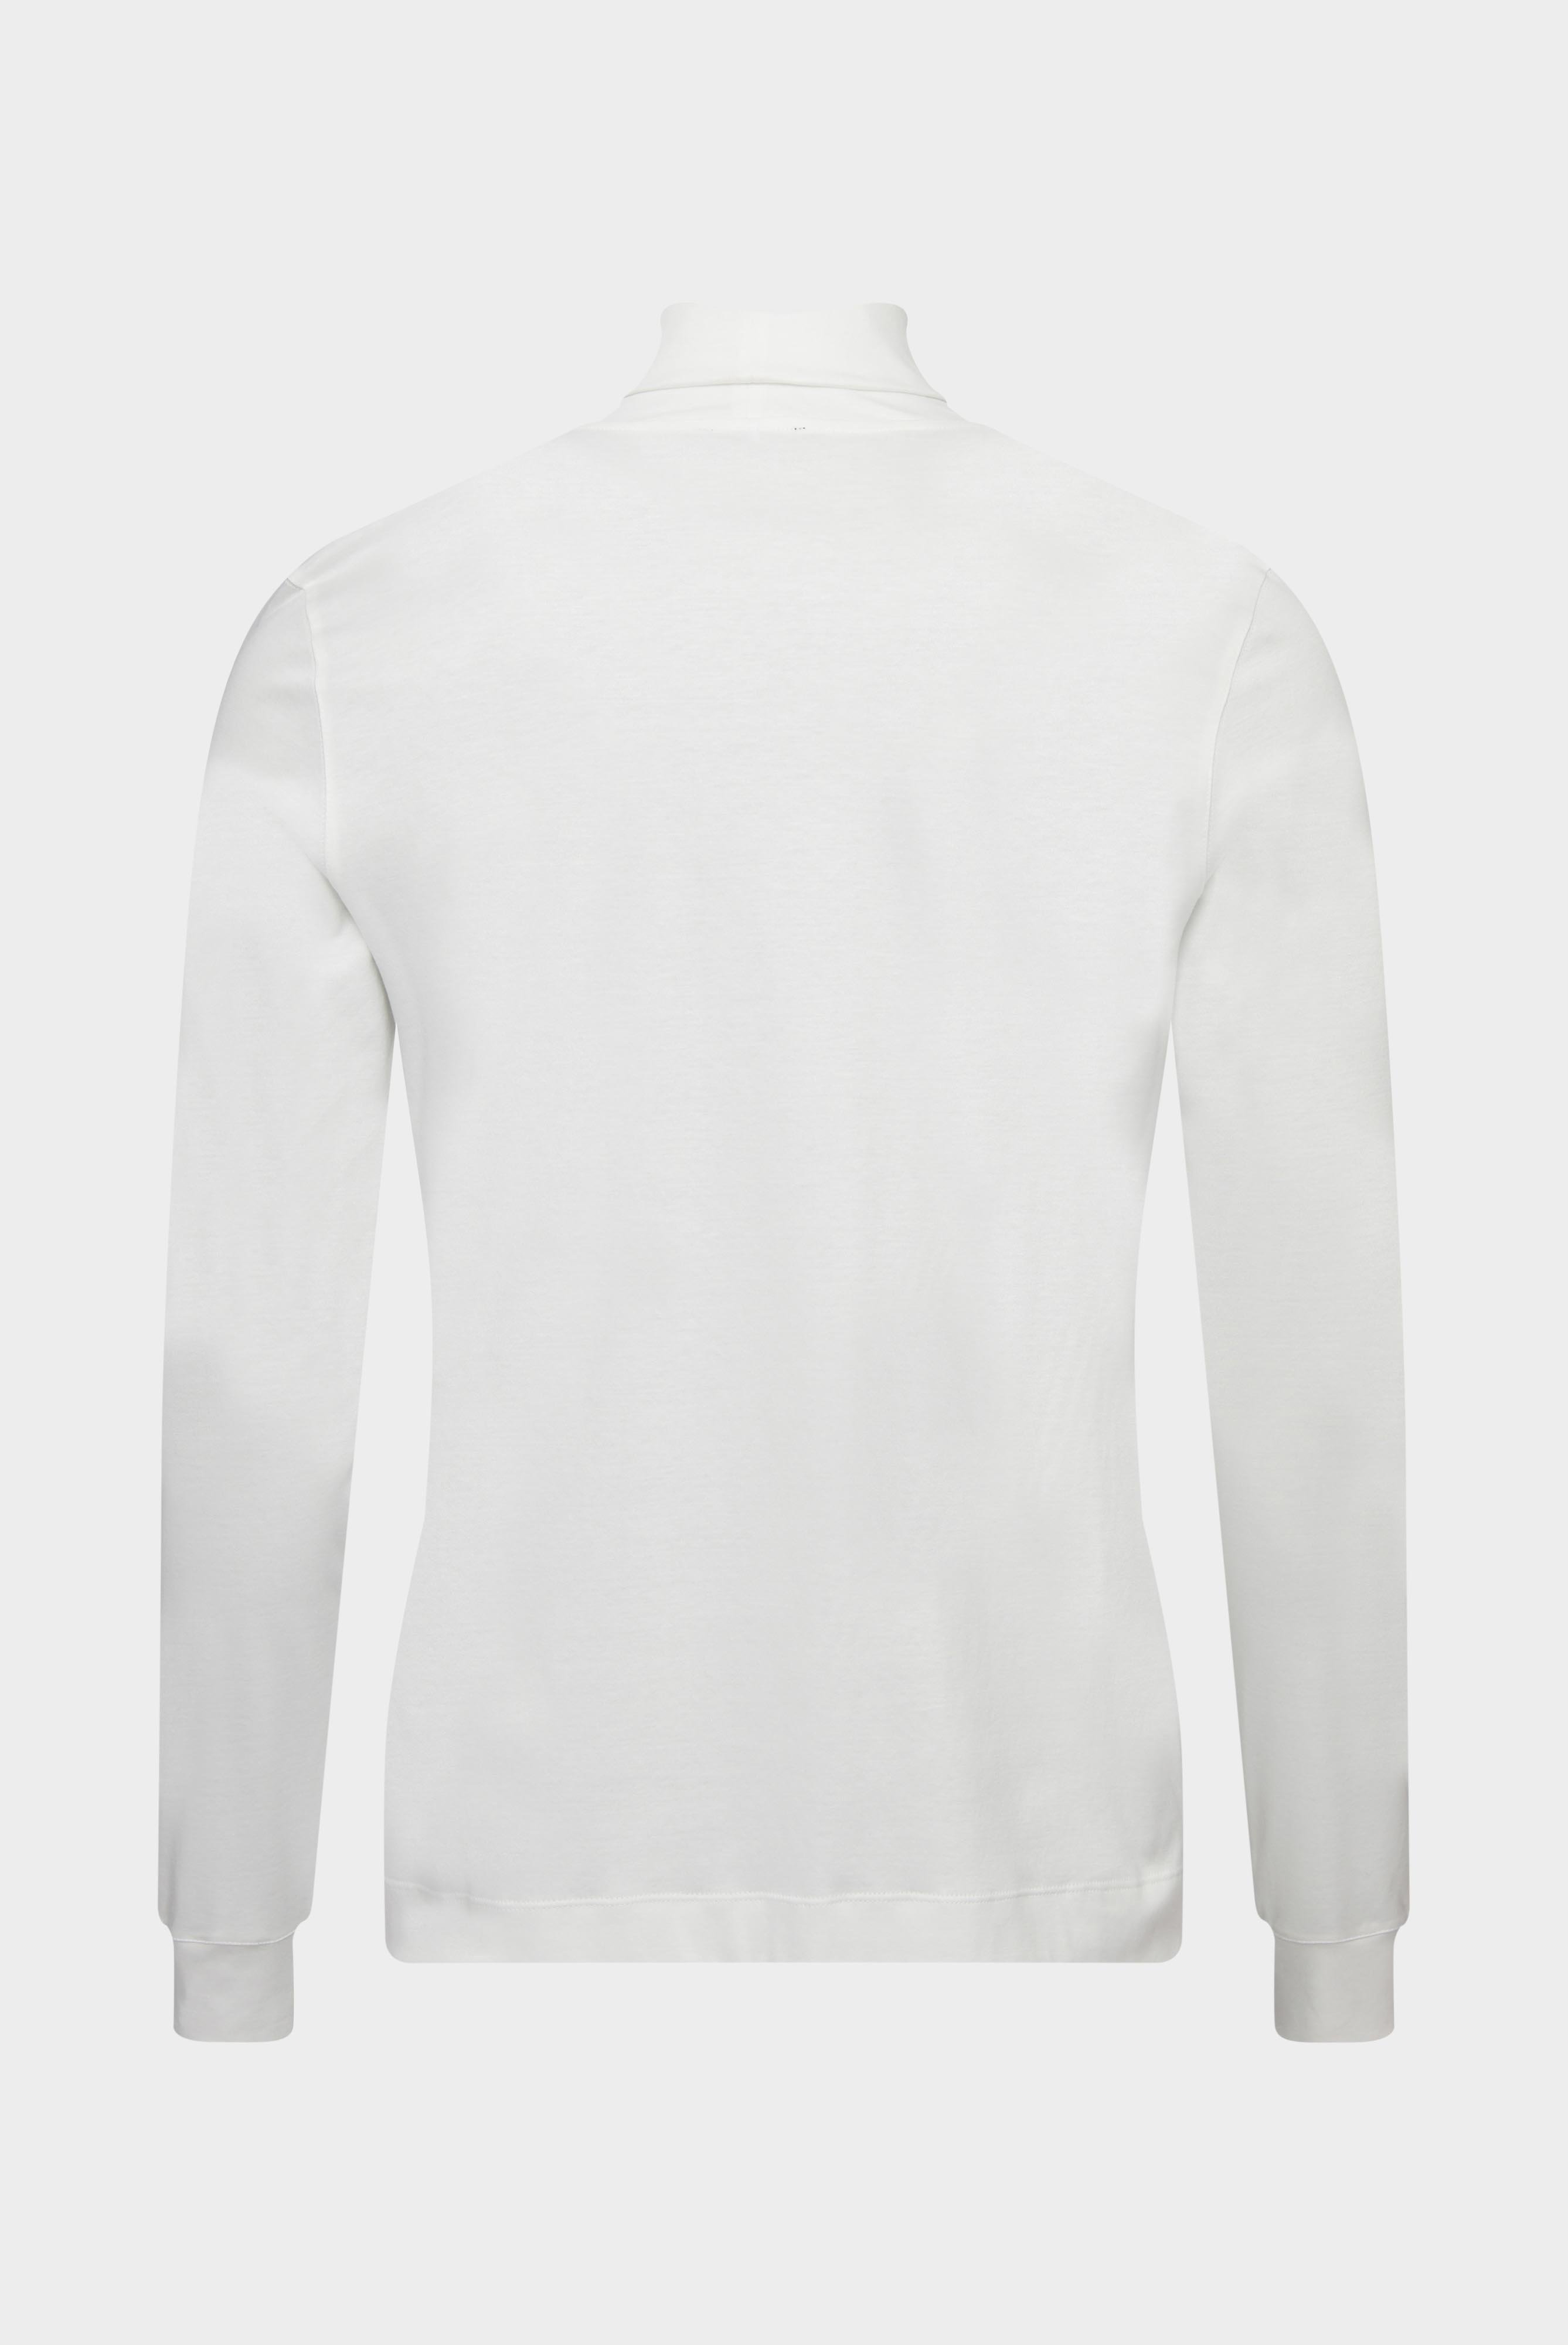 T-Shirts+Swiss Cotton Jersey Turtleneck Shirt+20.1719.UX.180031.100.XL